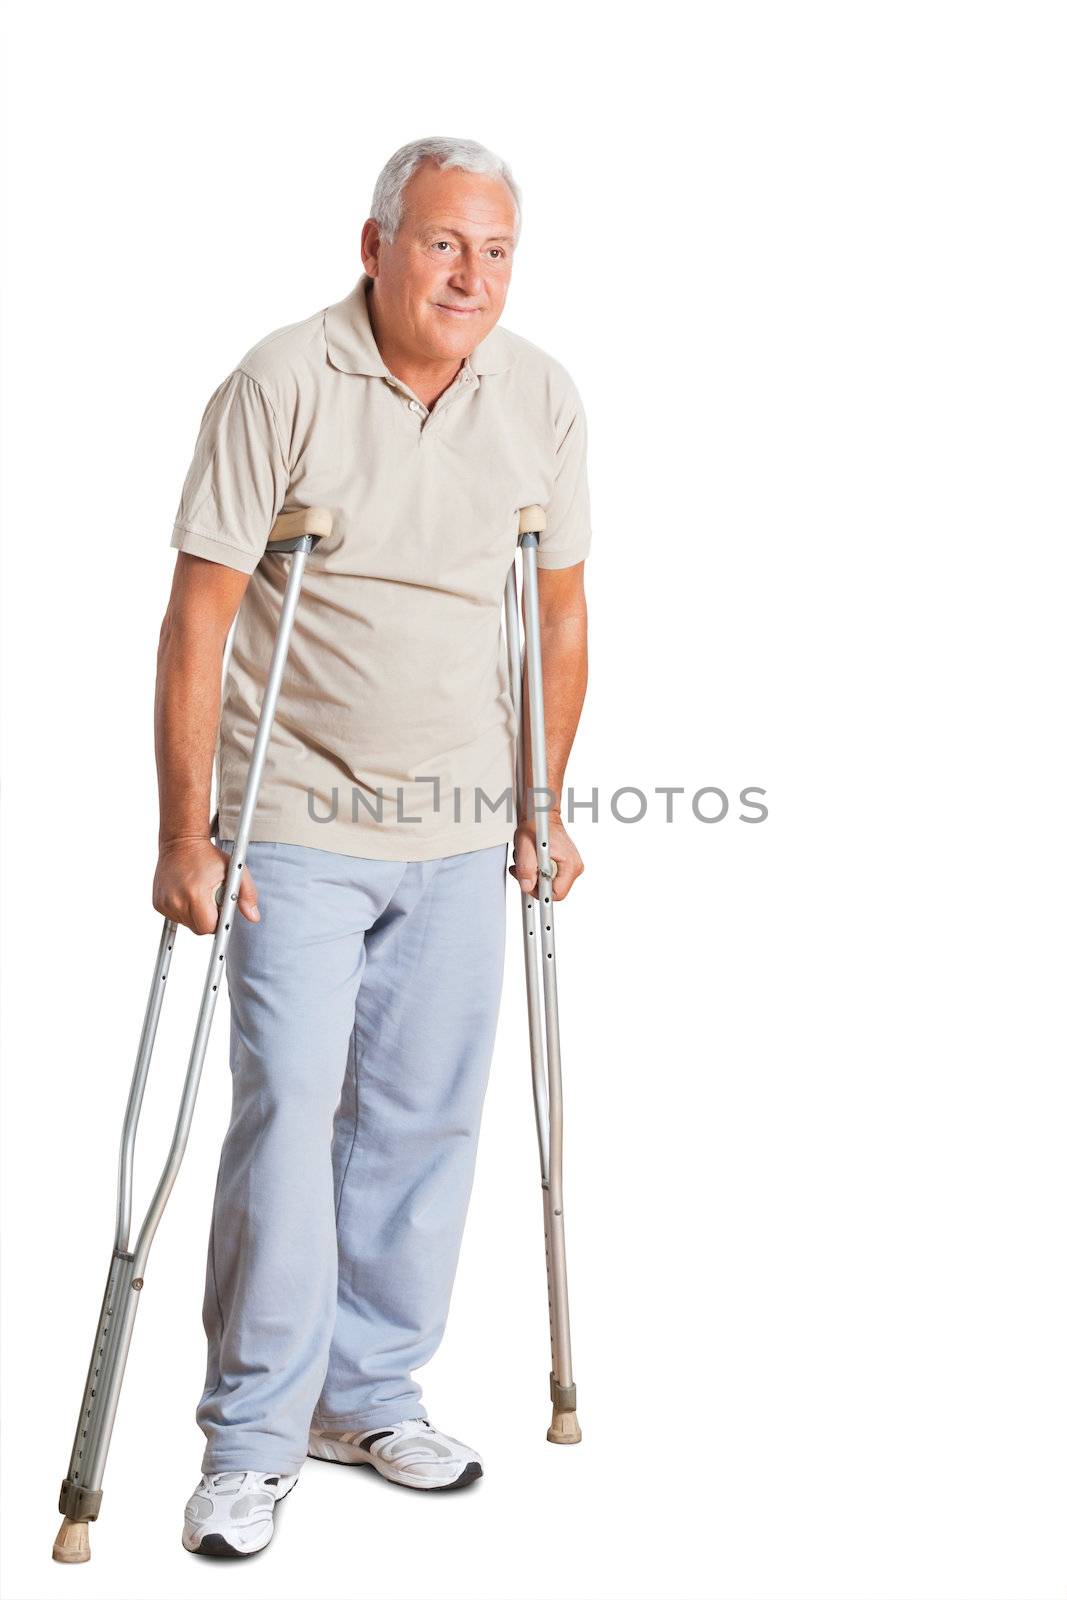 Senior Man On Crutches Looking Away by leaf